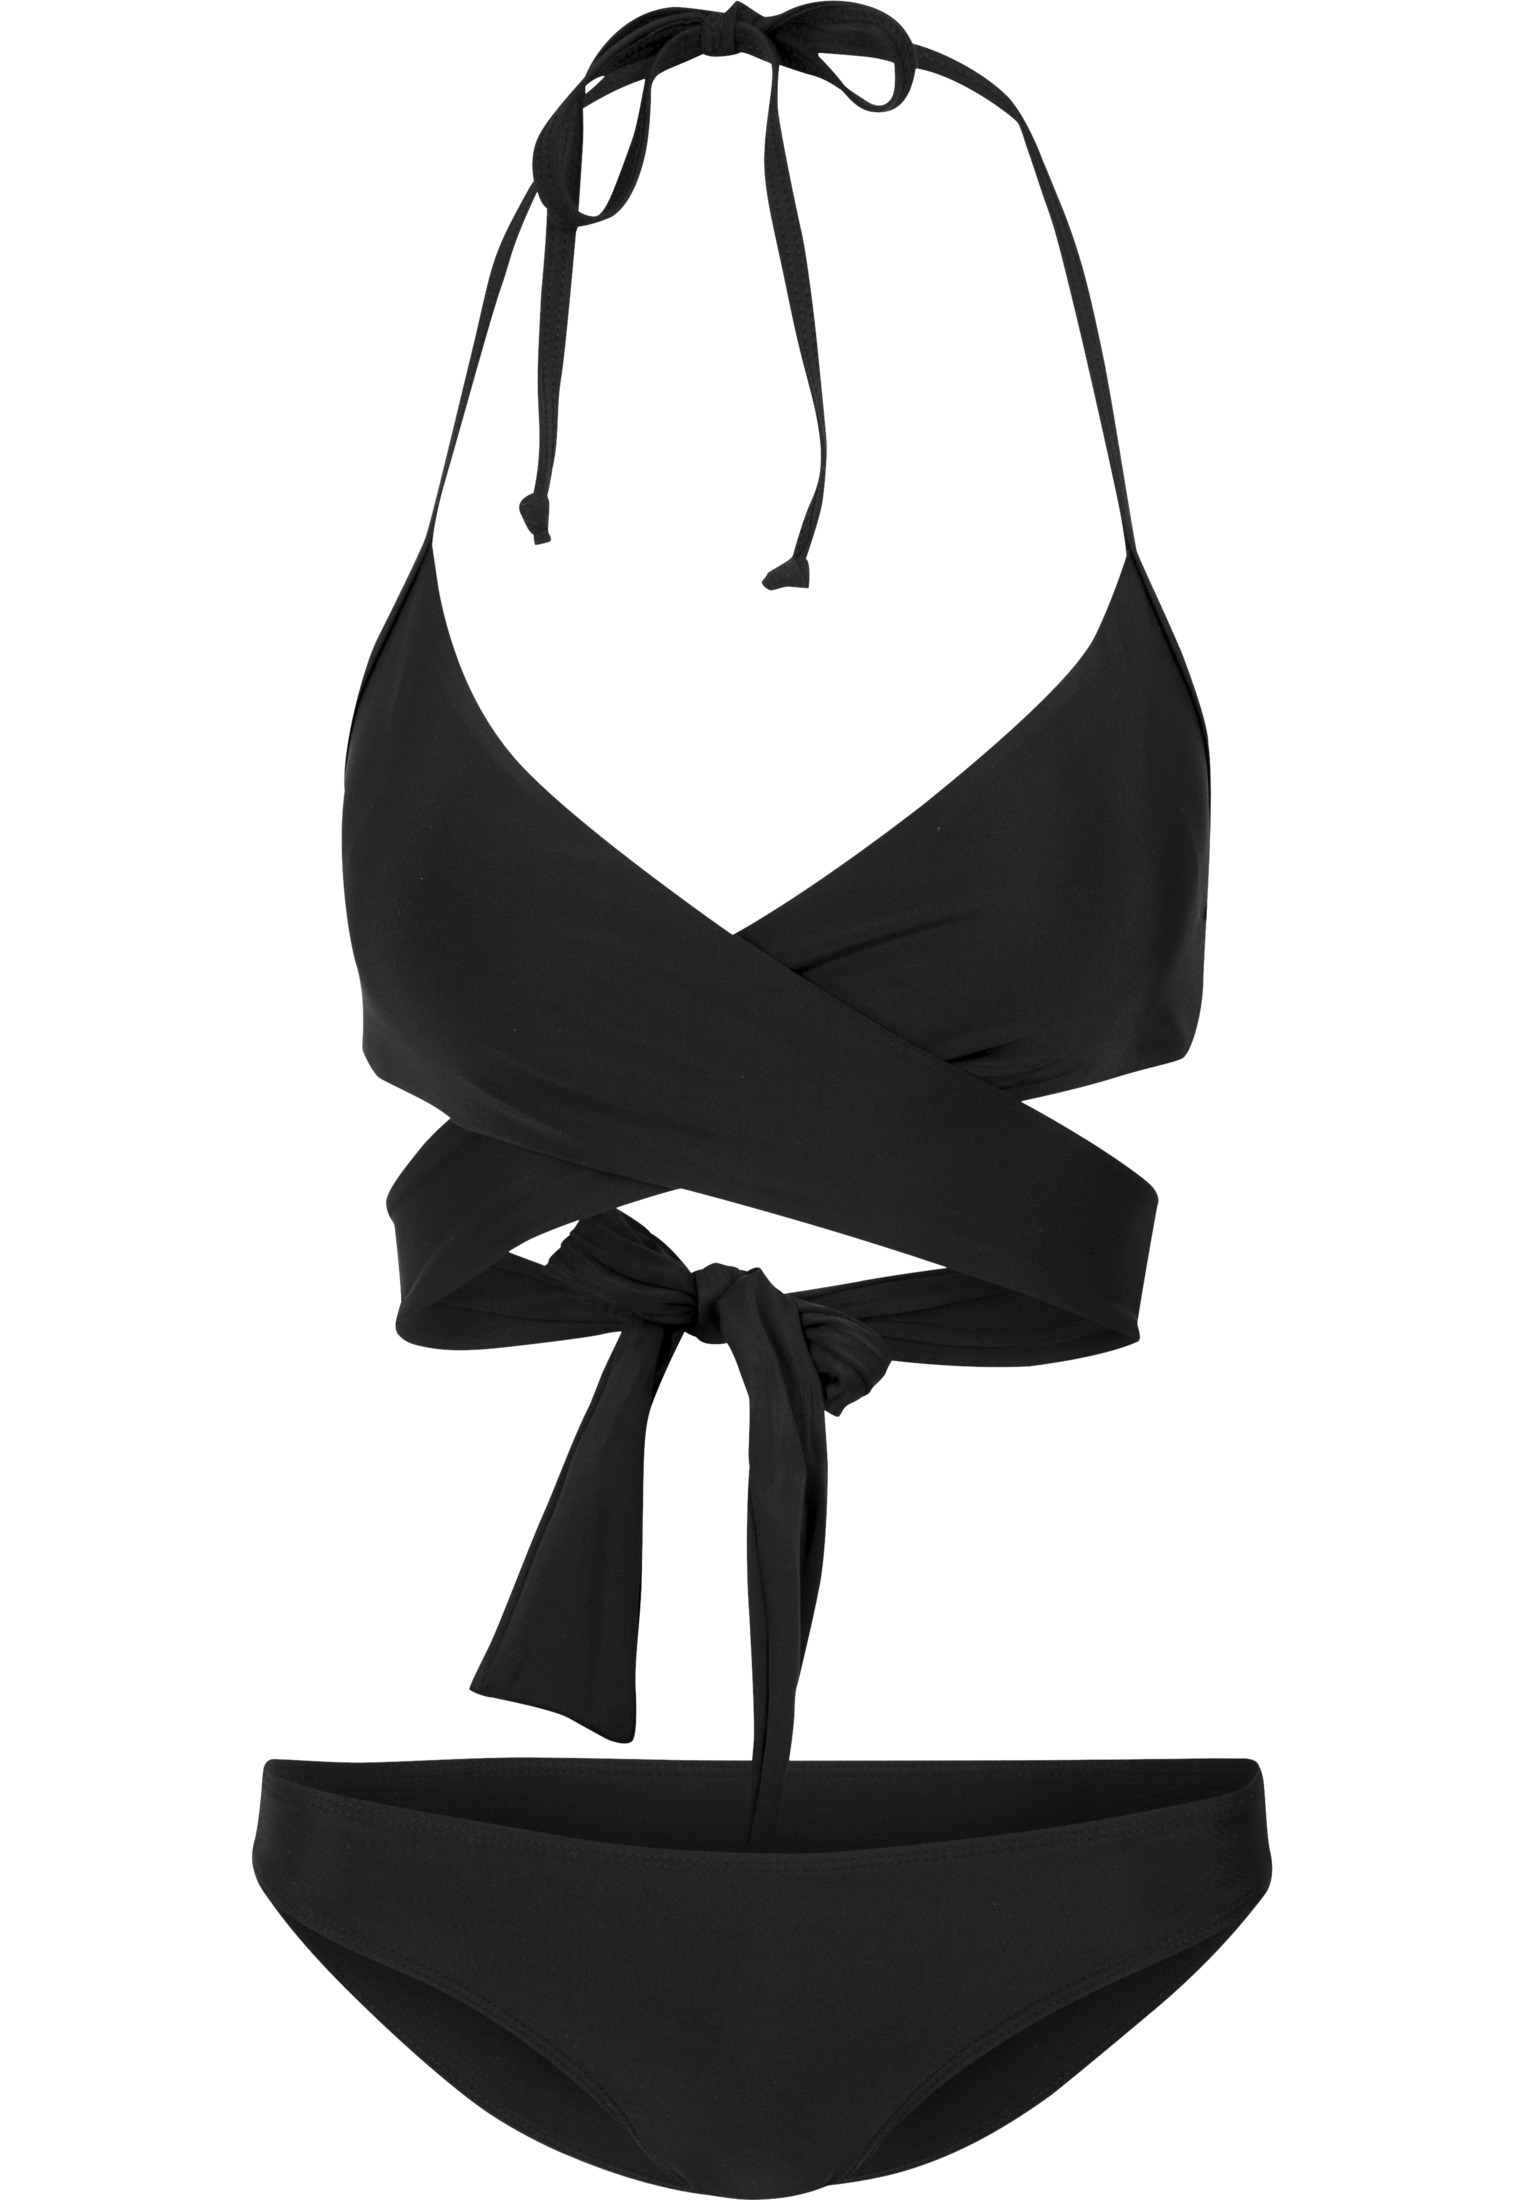 Bademode Ladies Bikini in Farbe black